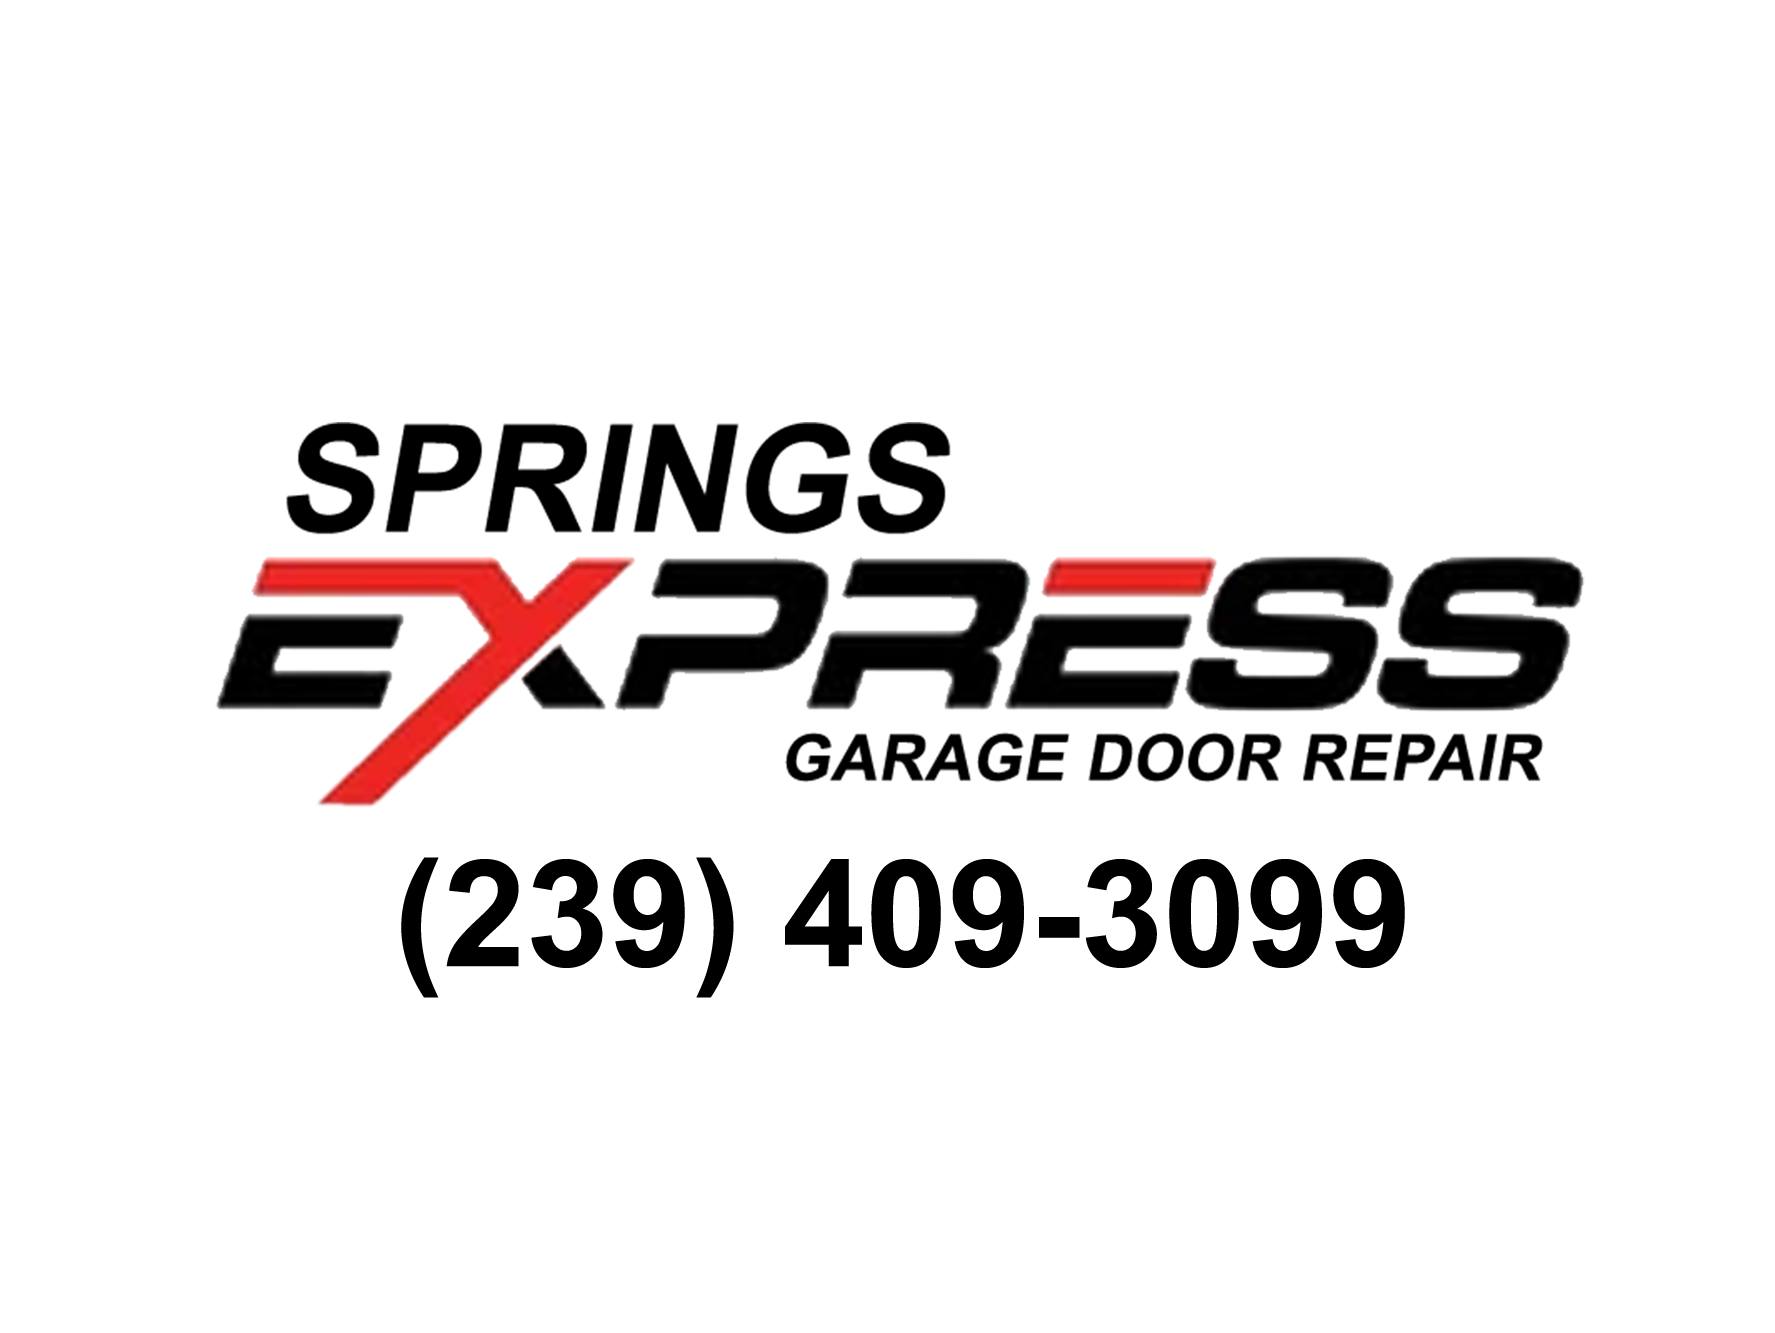 Springs Express Garage Door Repair